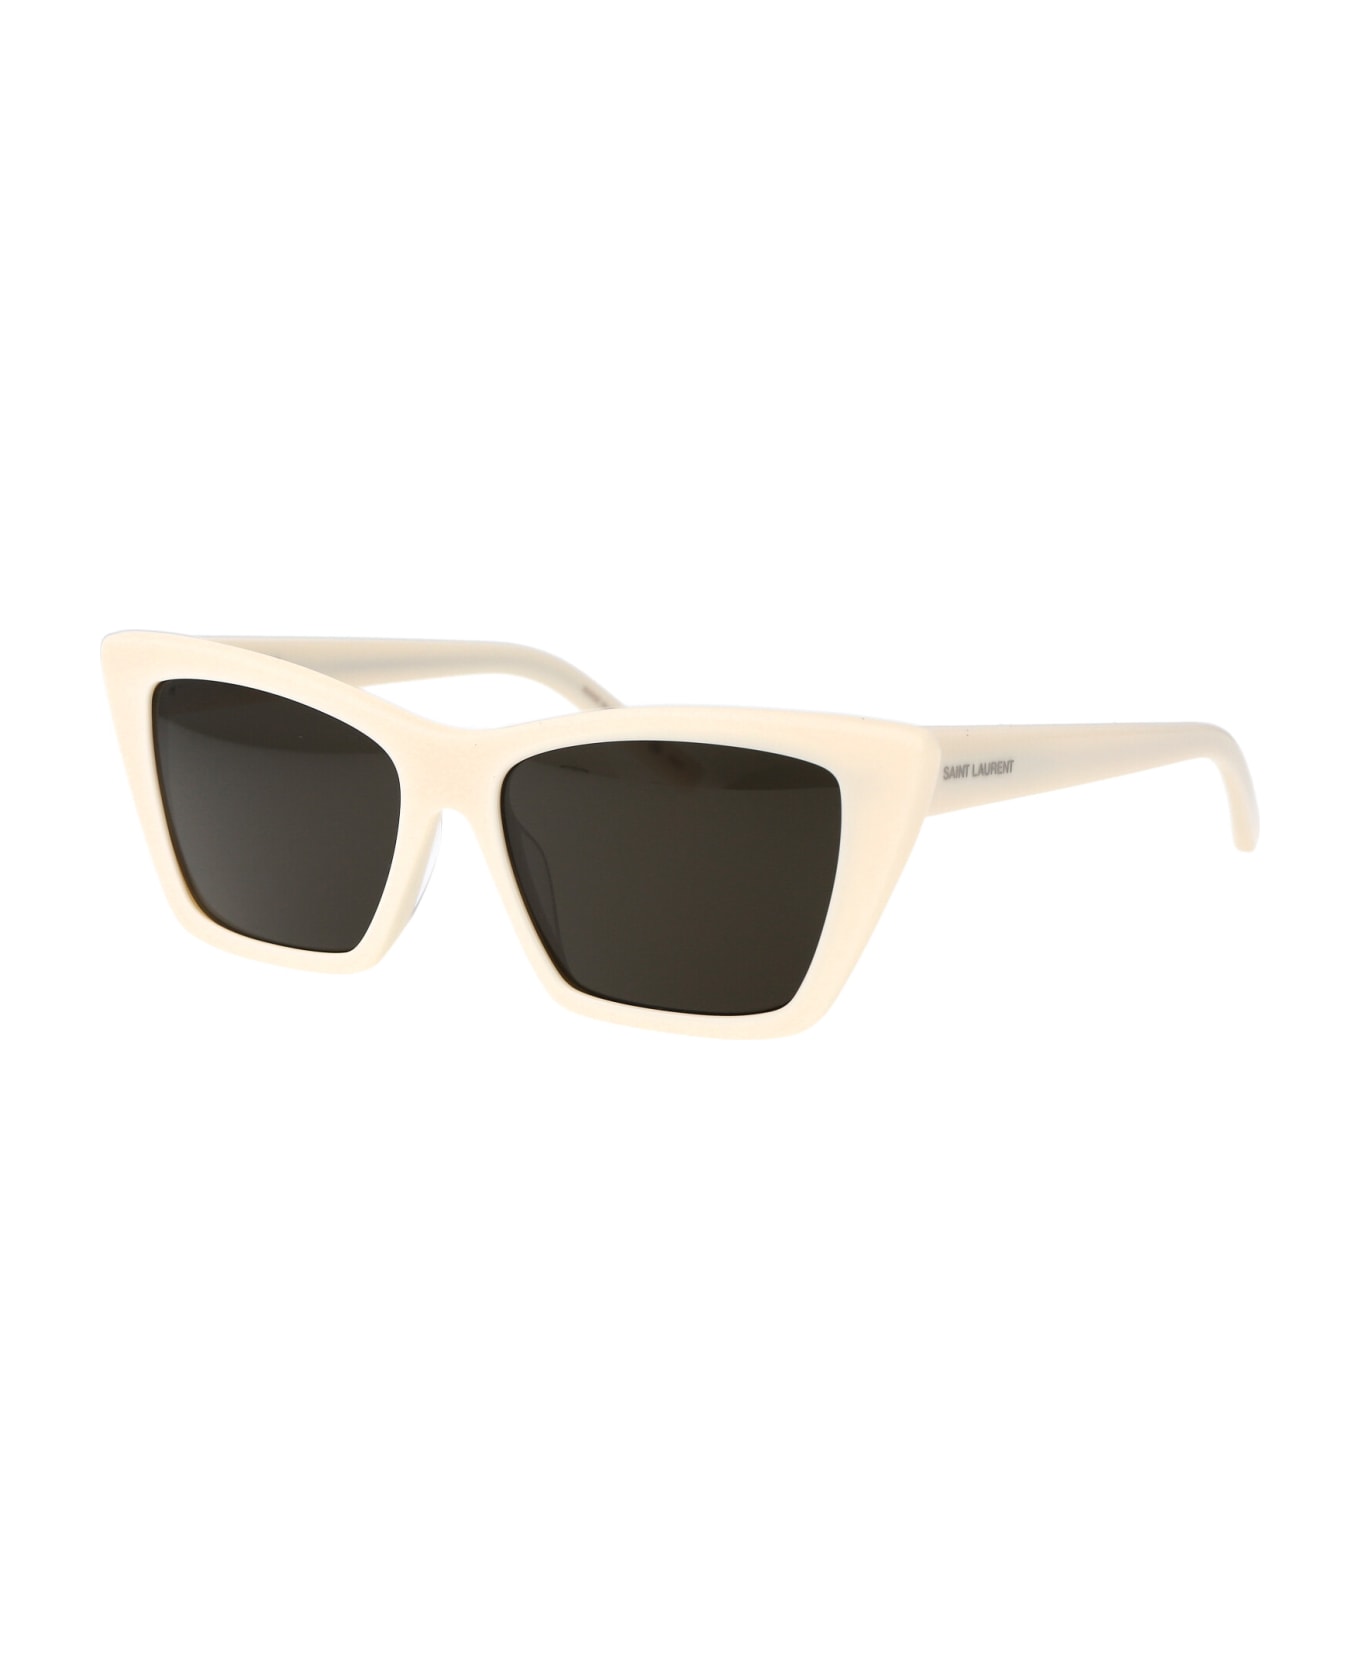 Saint Laurent Eyewear Sl 276 Mica Sunglasses - 056 IVORY IVORY GREY